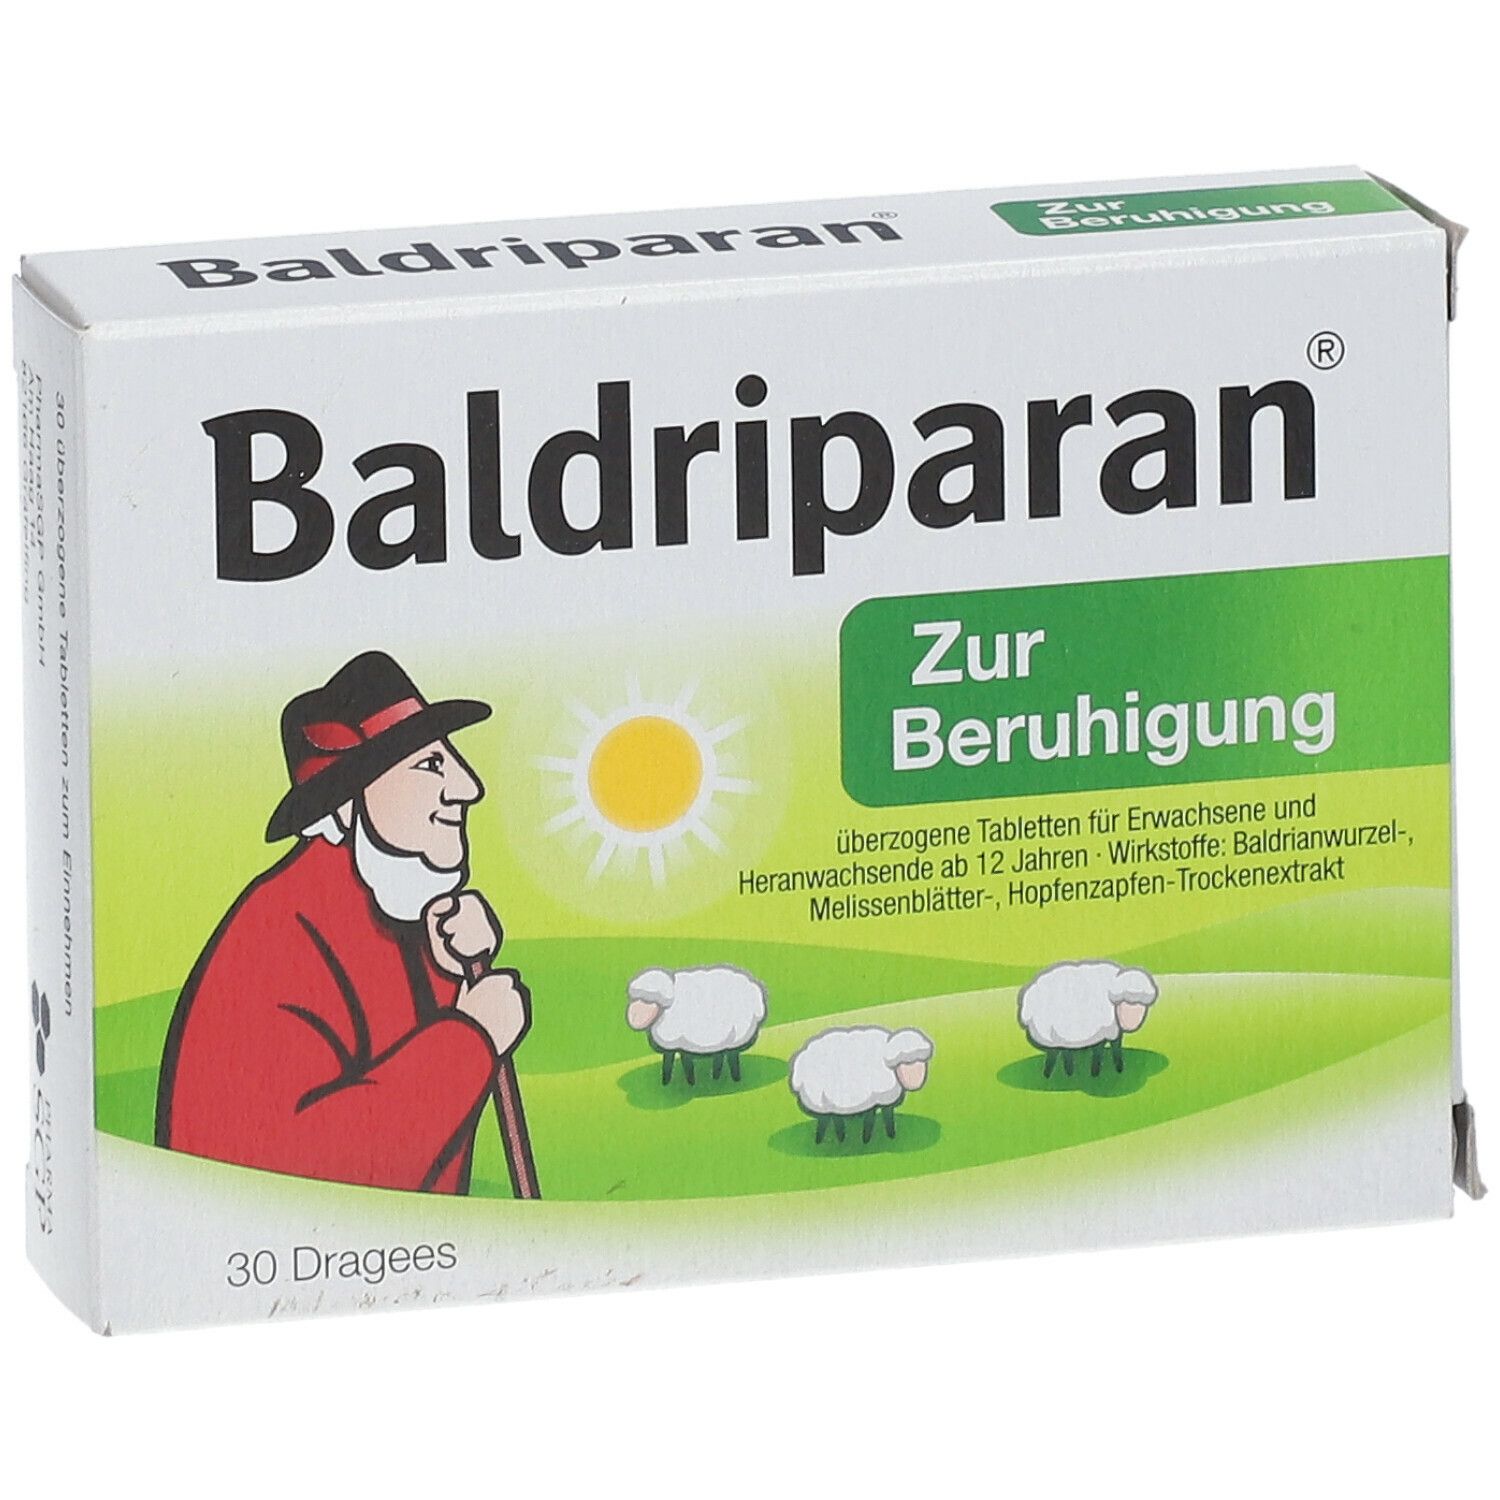 Baldriparan® Zur Beruhigung